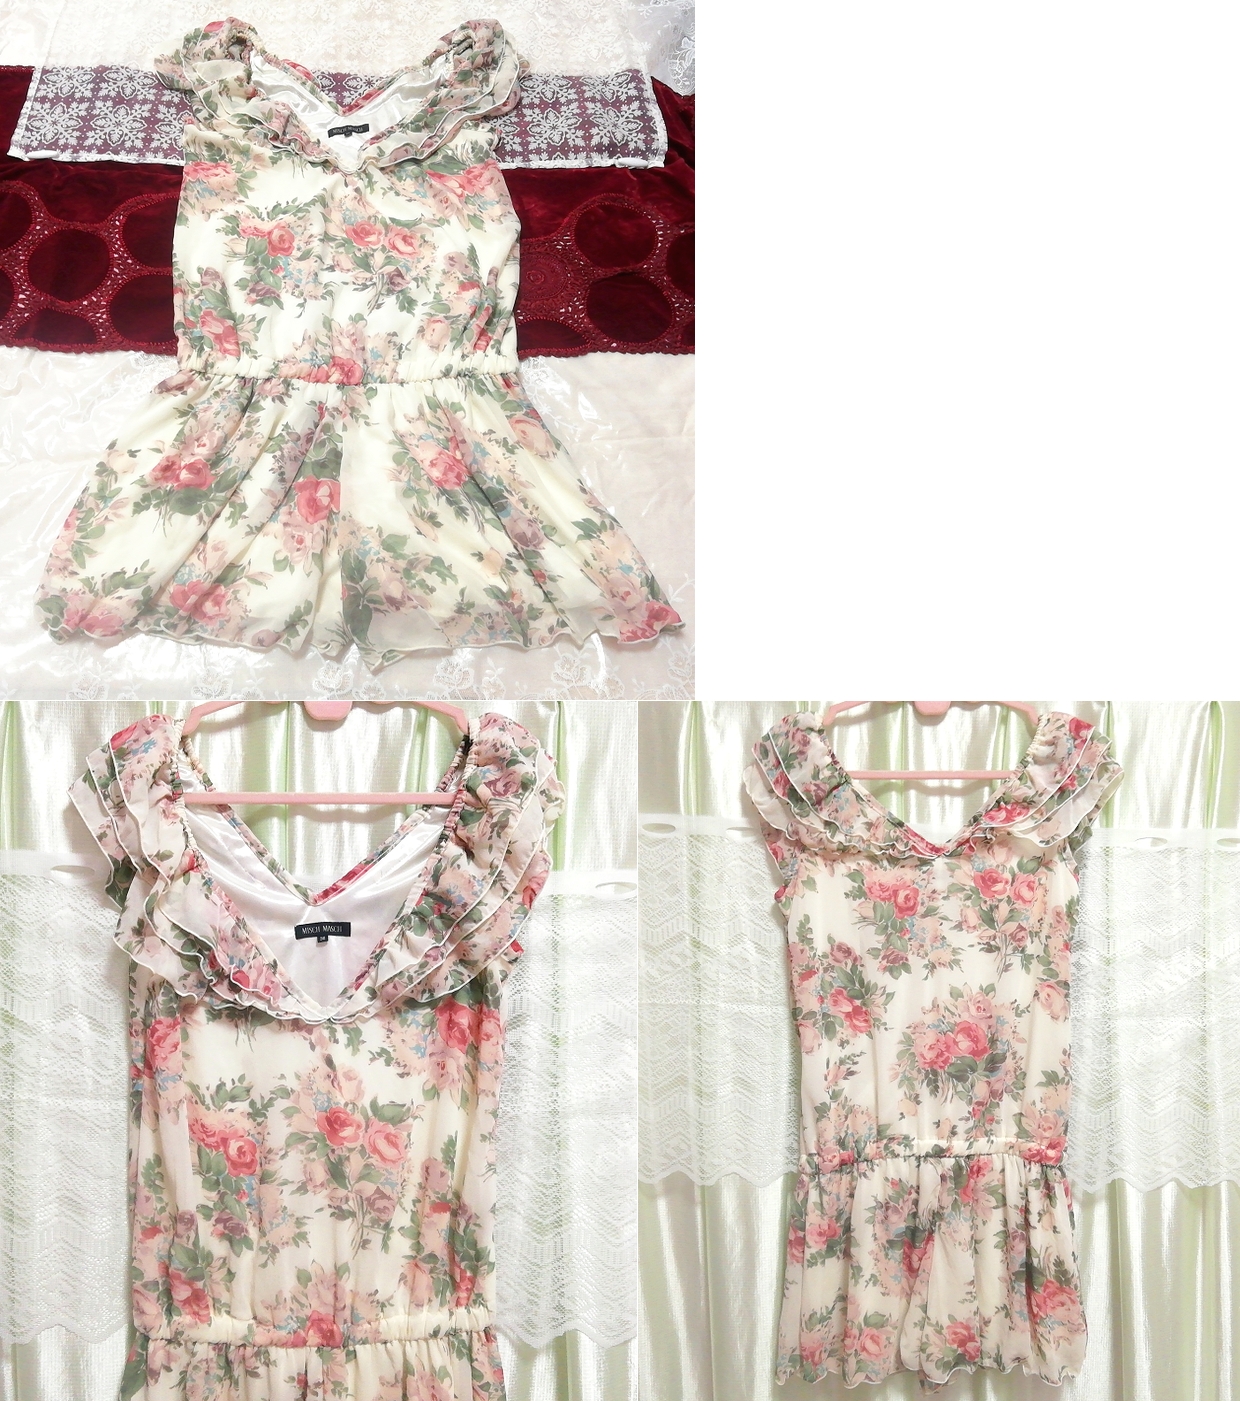 Floral white floral print chiffon culotte negligee nightgown nightwear, fashion, ladies' fashion, nightwear, pajamas